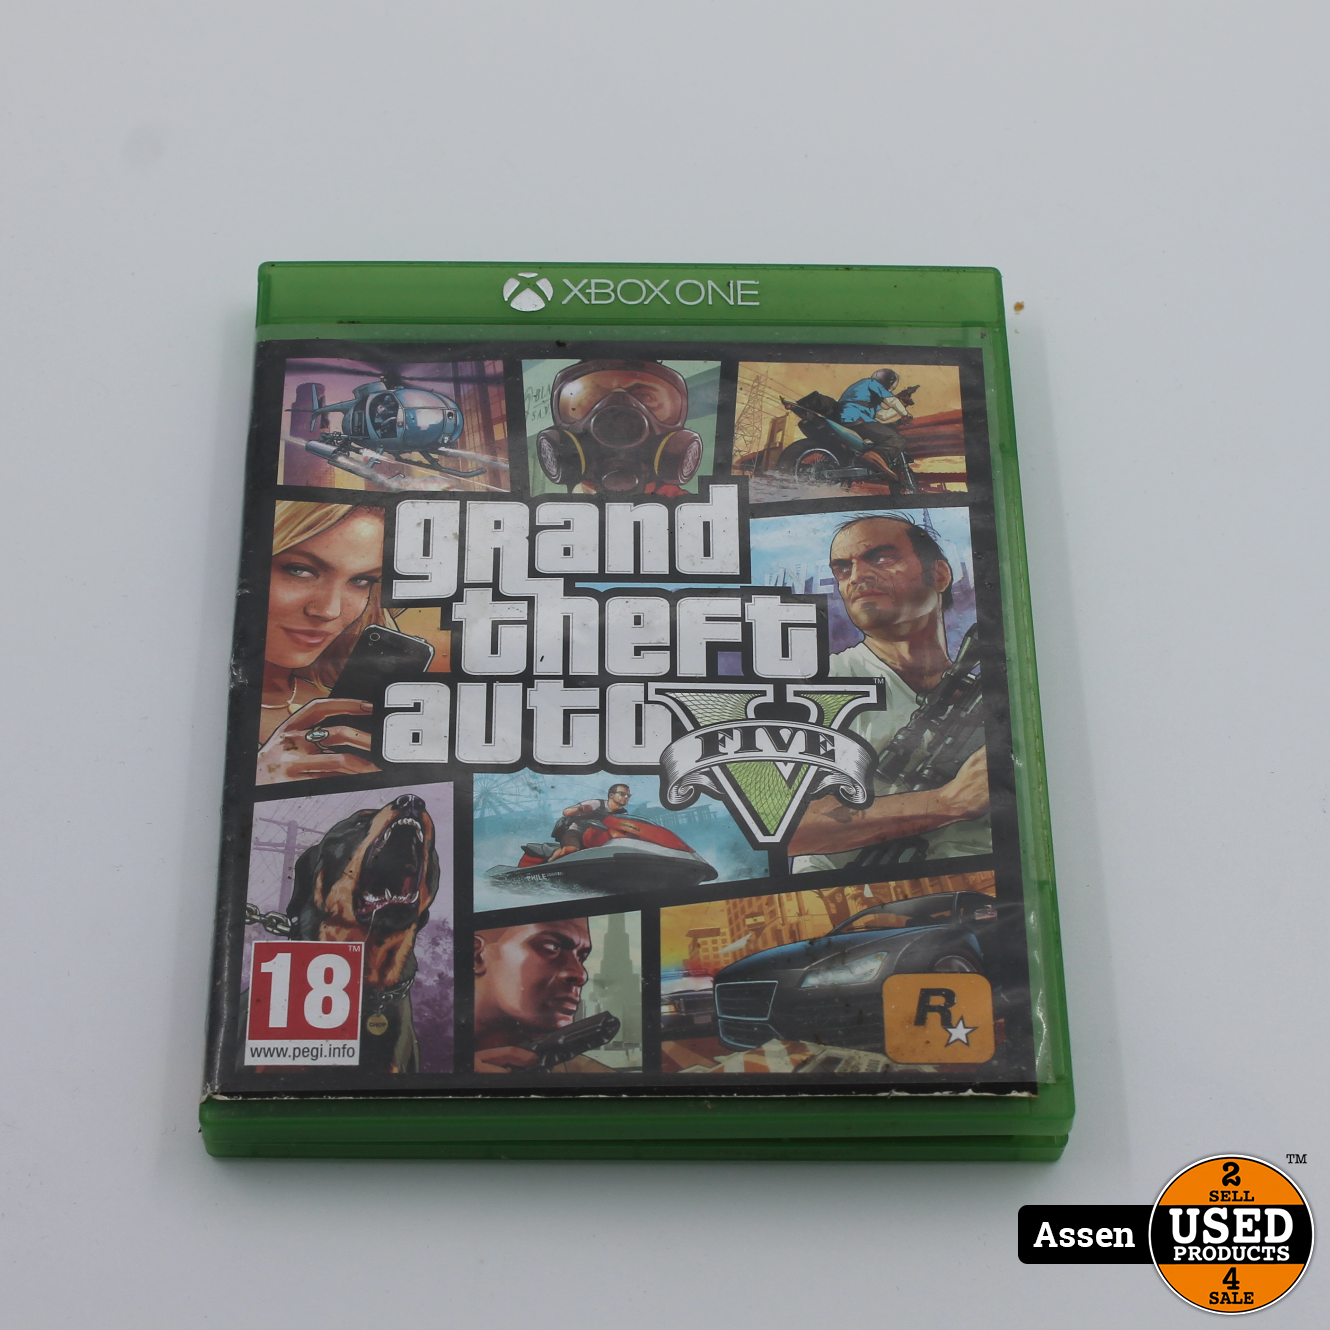 Narabar Geweldig Extreem belangrijk Grand Theft Auto V Xbox One Game - Used Products Assen